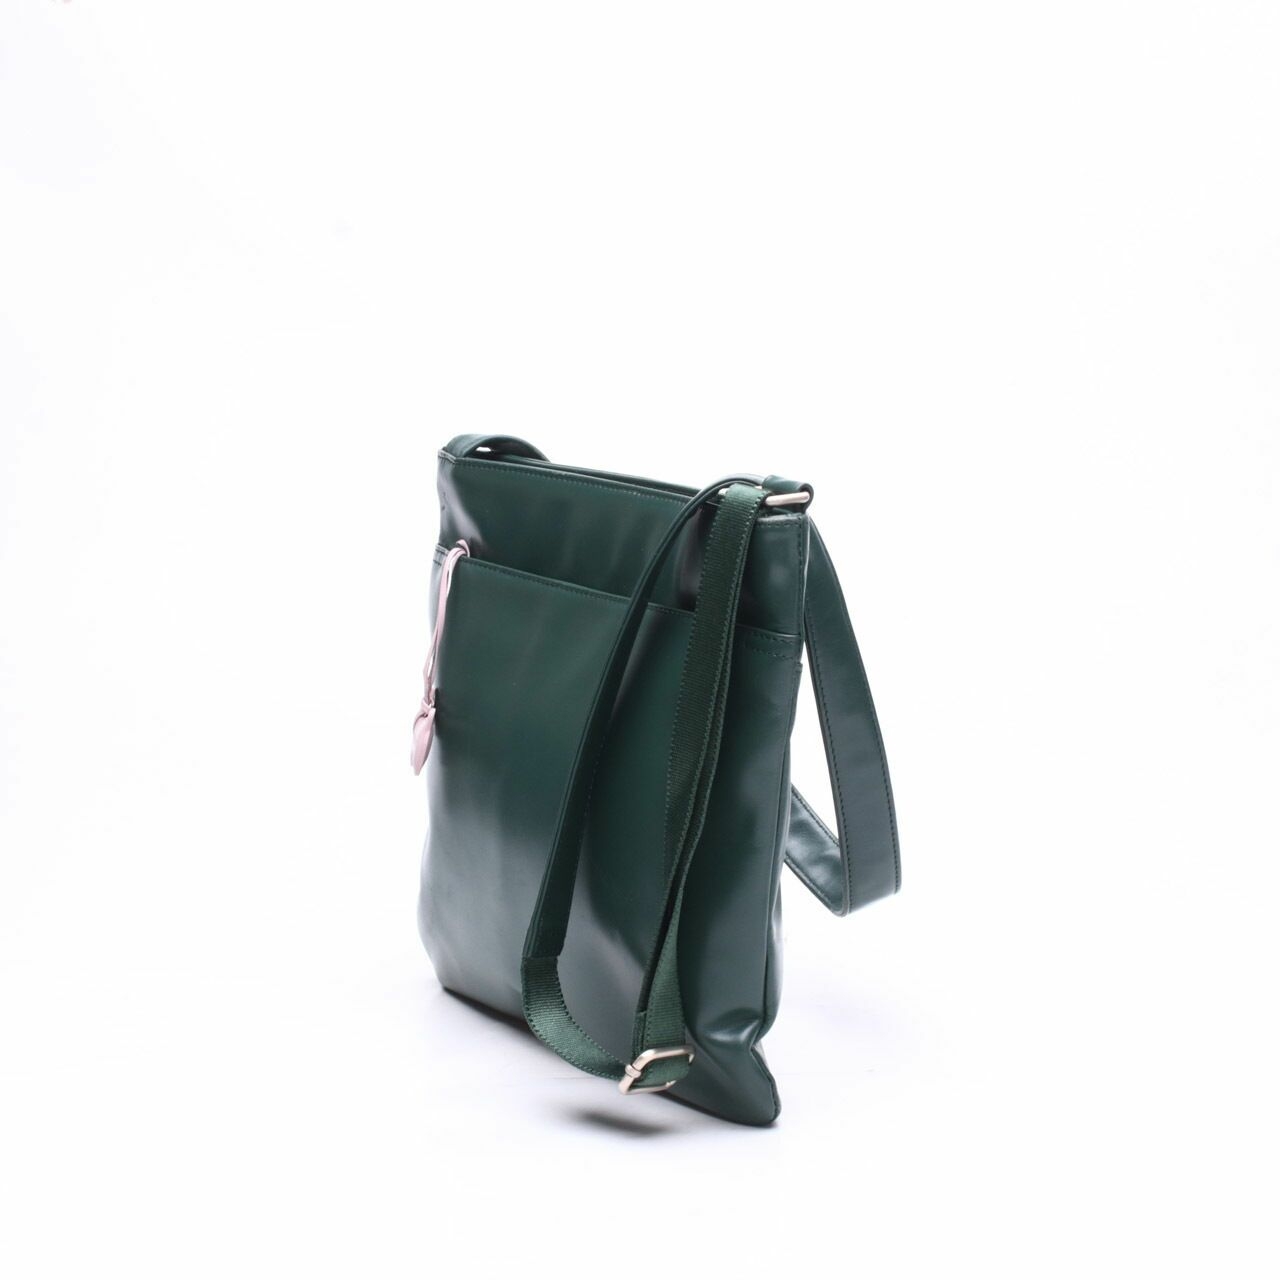 Radley London Green Sling Bag